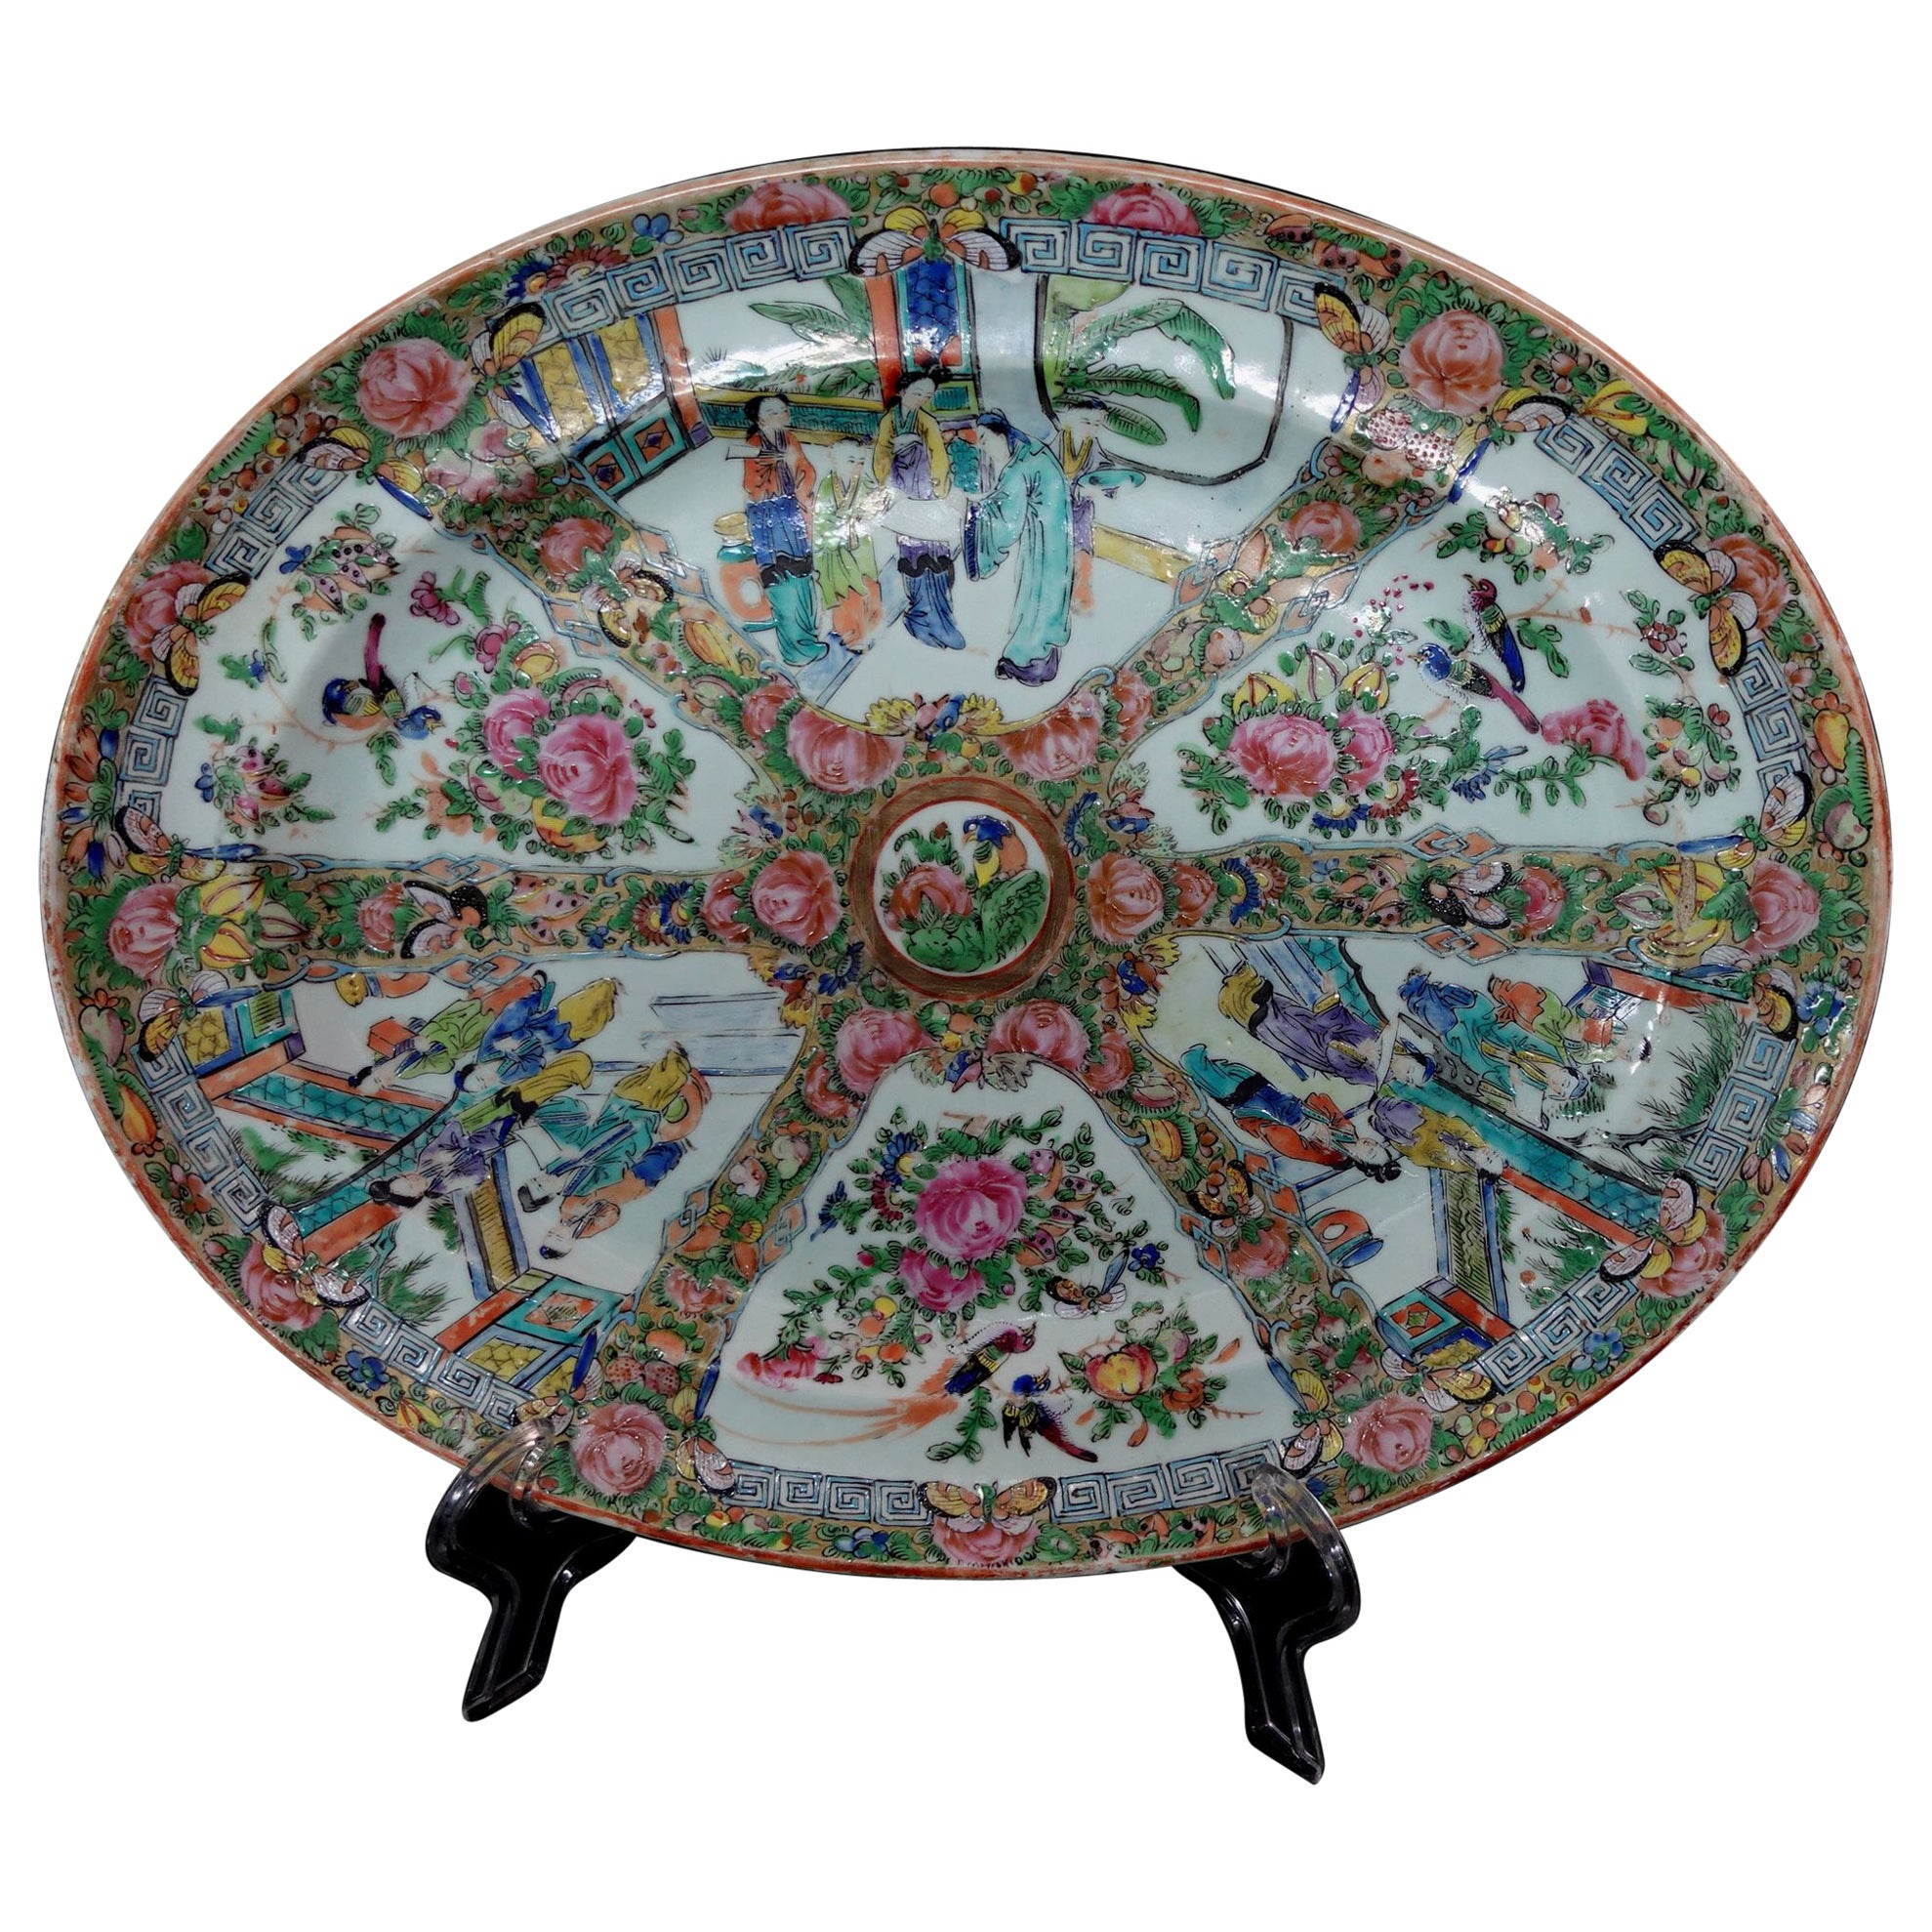 Oval Famille Rose Export Porcelain Platter, 19th Century